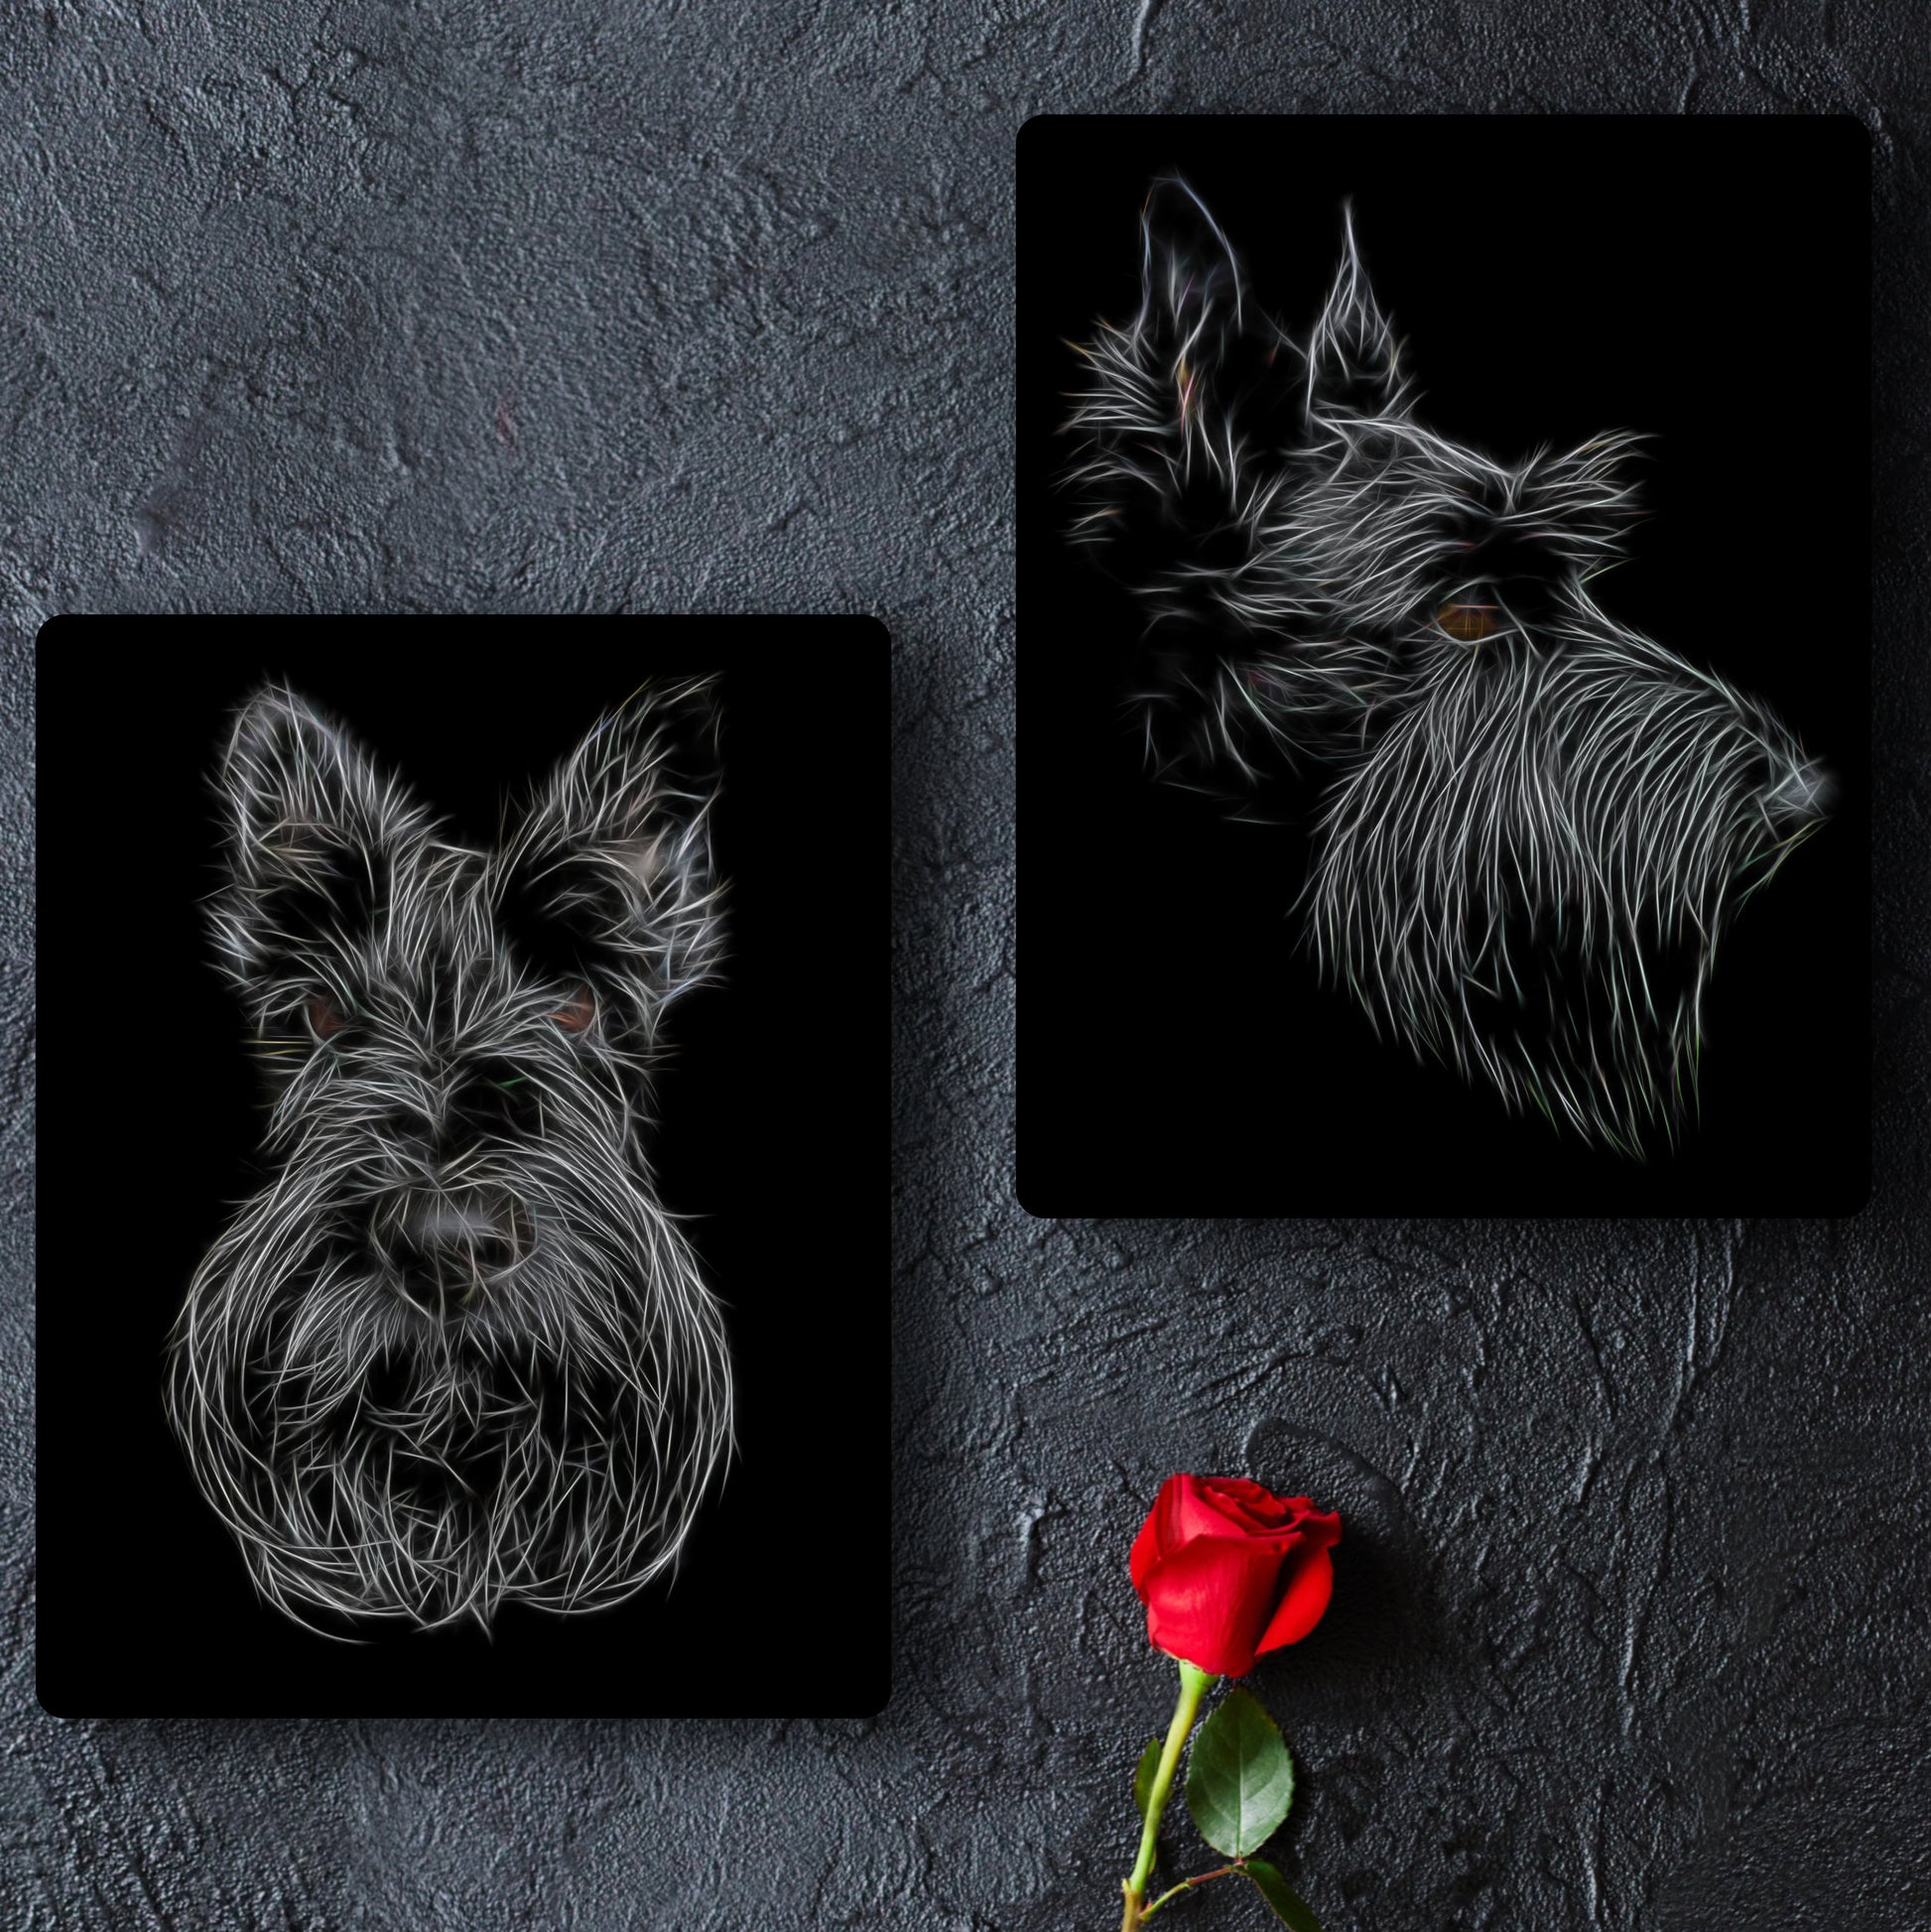 Scottish Terrier Metal Wall Plaque with Fractal Art Design. Scottie Dog Gift